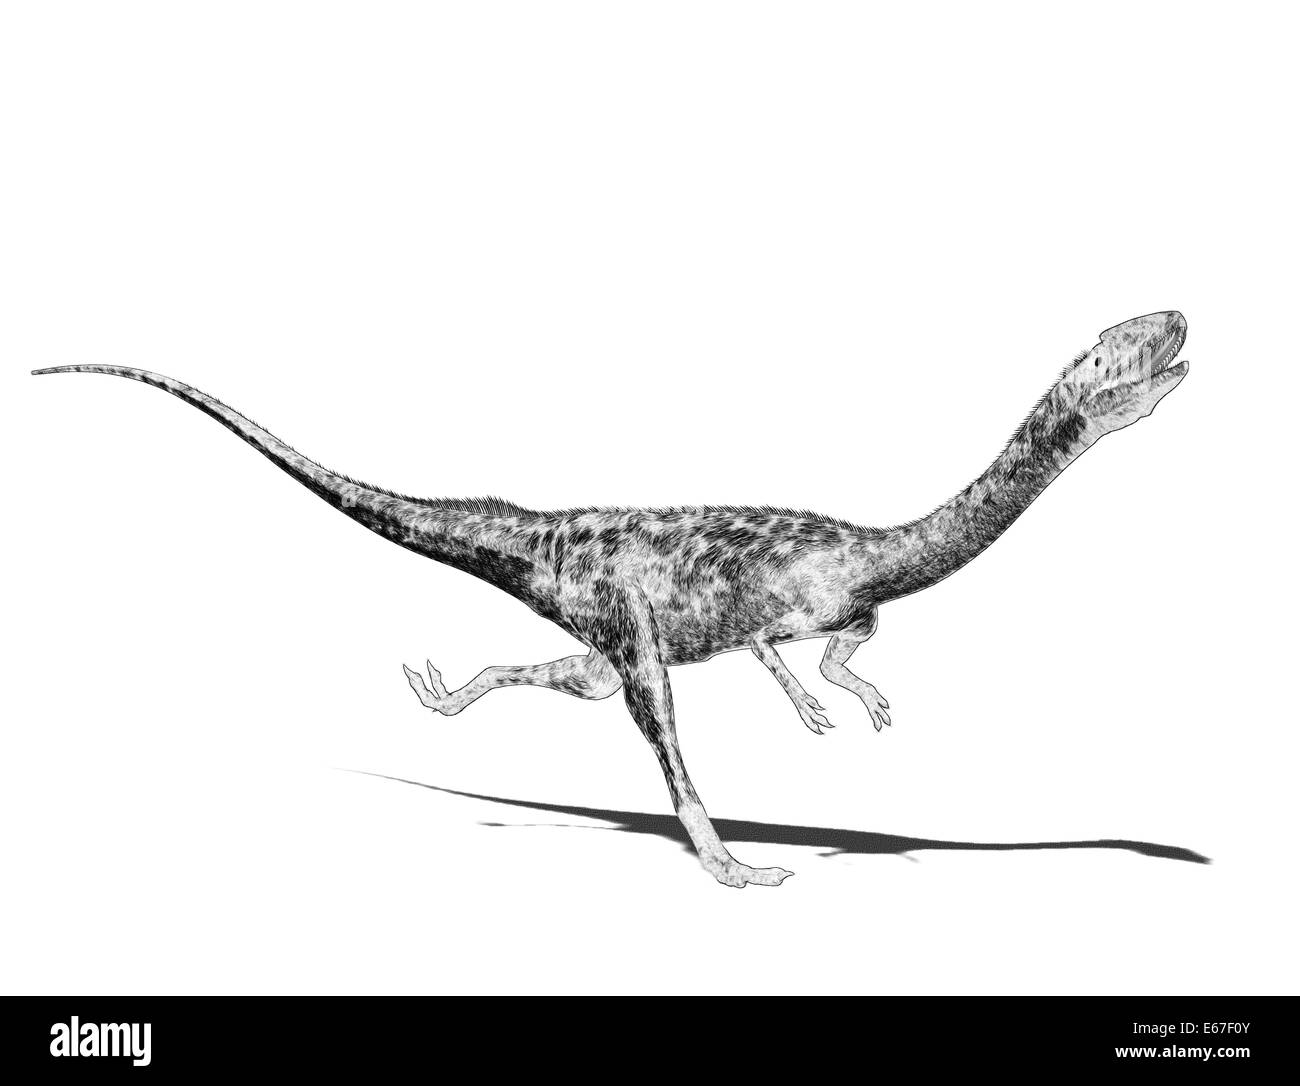 Dinosaurier Coelophysis / dinosaur Coelophysis Stock Photo